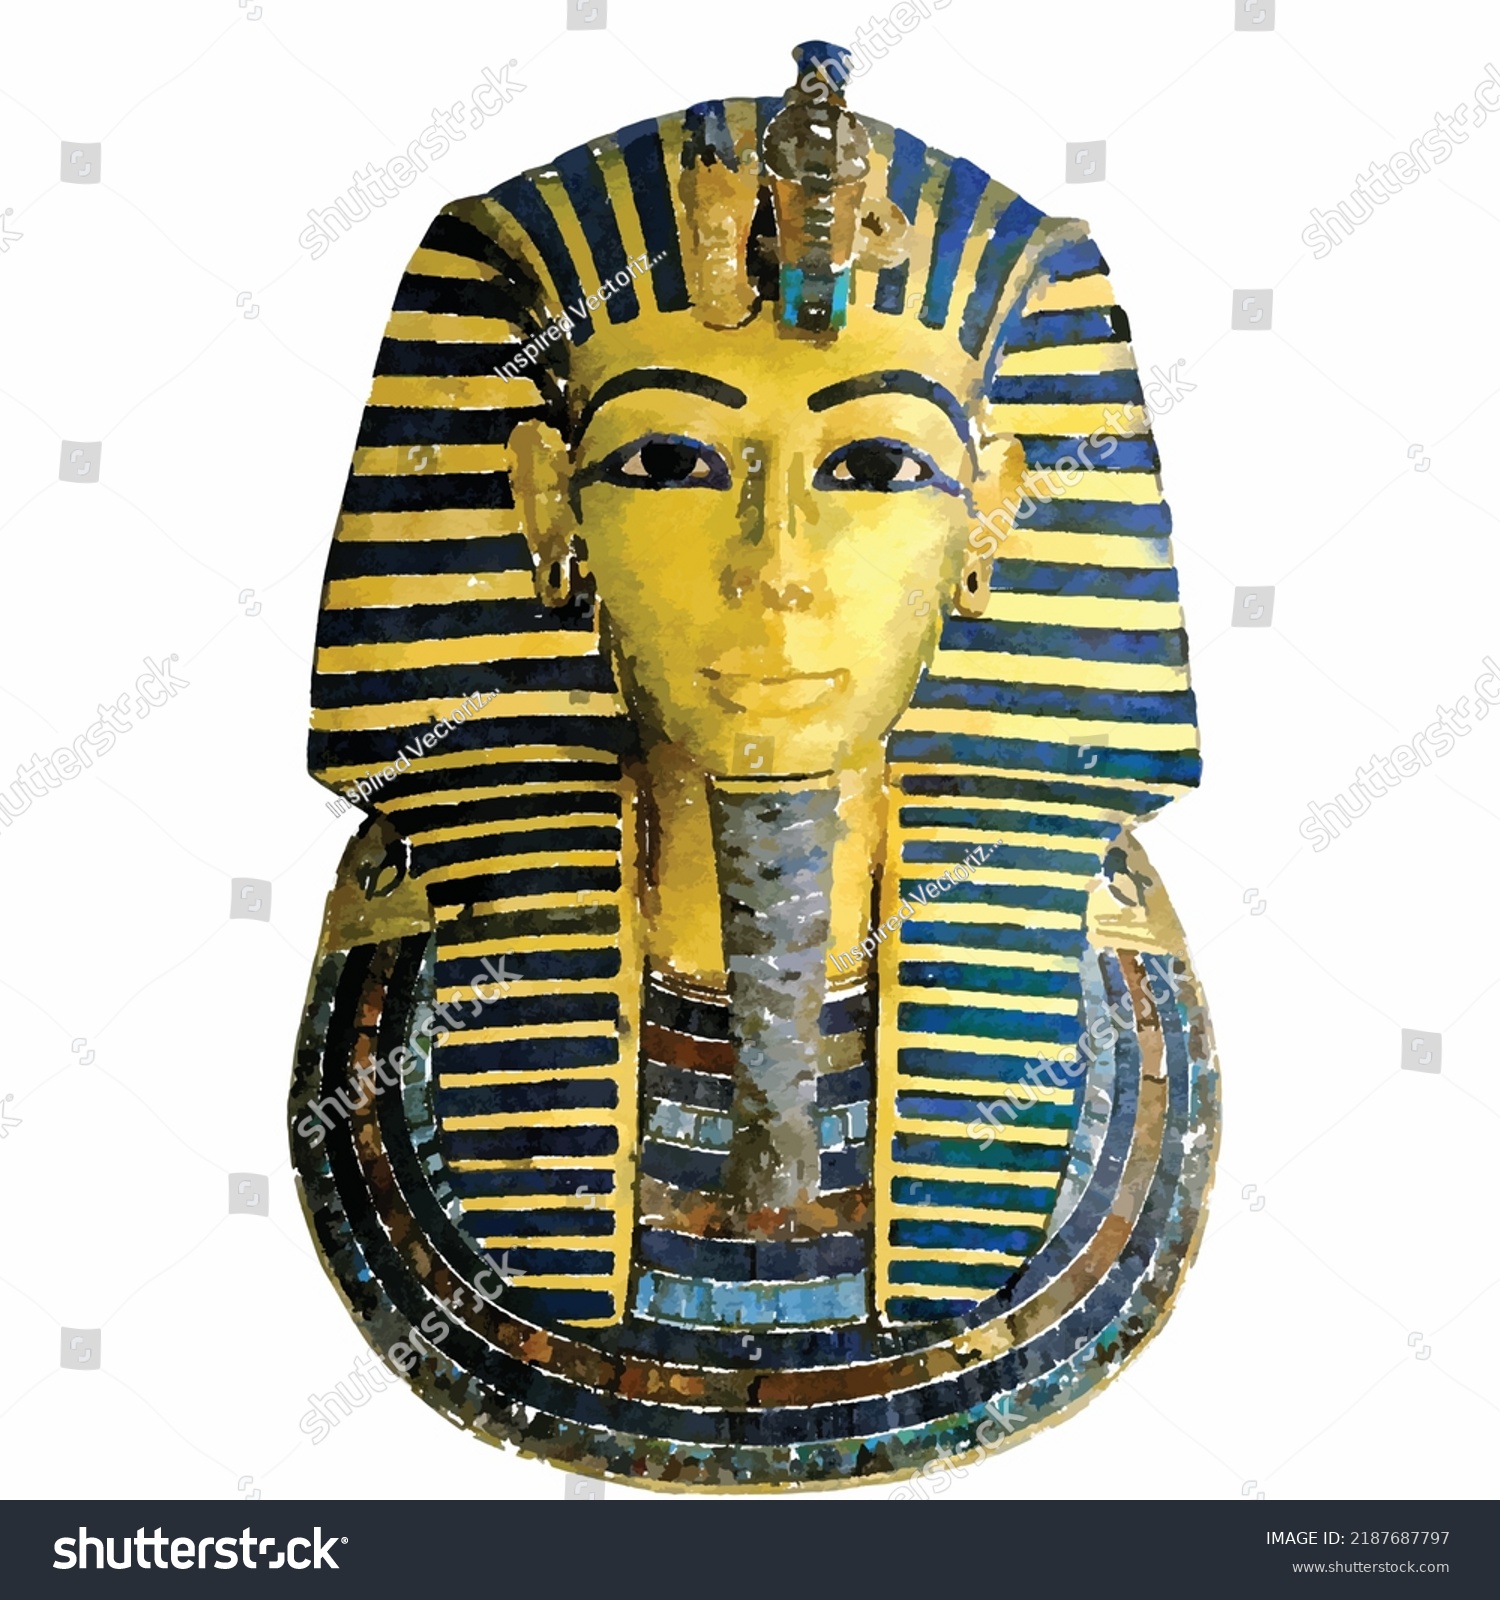 Tutankhamun mask vector picture. Tutankhamun illustration. Pharaoh hand drawn. Egyptian style clipart. Cartoon egypt picture. Museum exponate. Clipart for logo, design and decoration. #2187687797